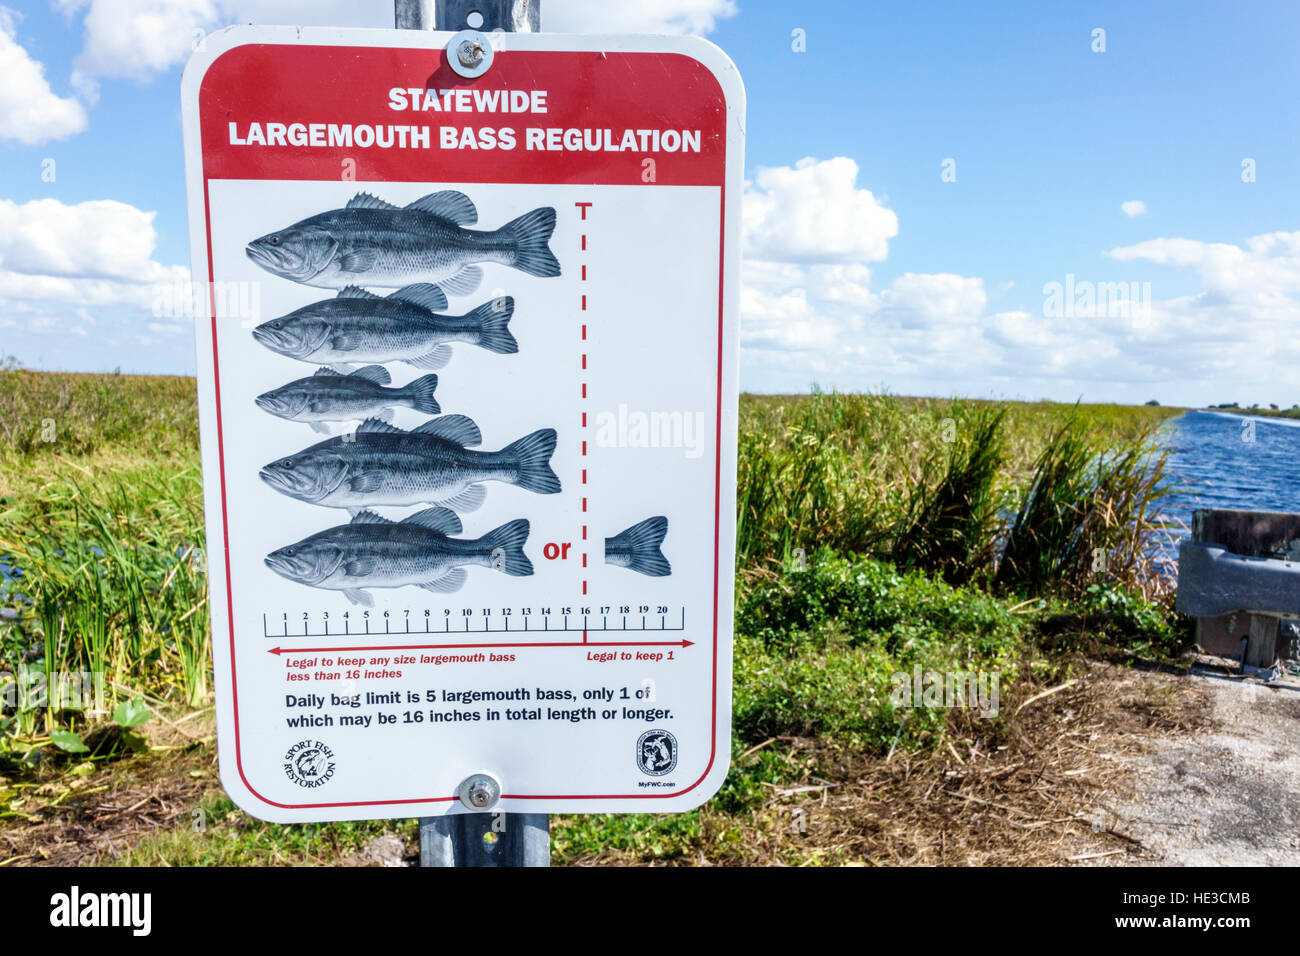 Florida Everglades,Alligator Alley,sign,fishing,largemouth bass regulation,limit,Francis S. Taylor Wildlife Management Area,FL161125057 Stock Photo